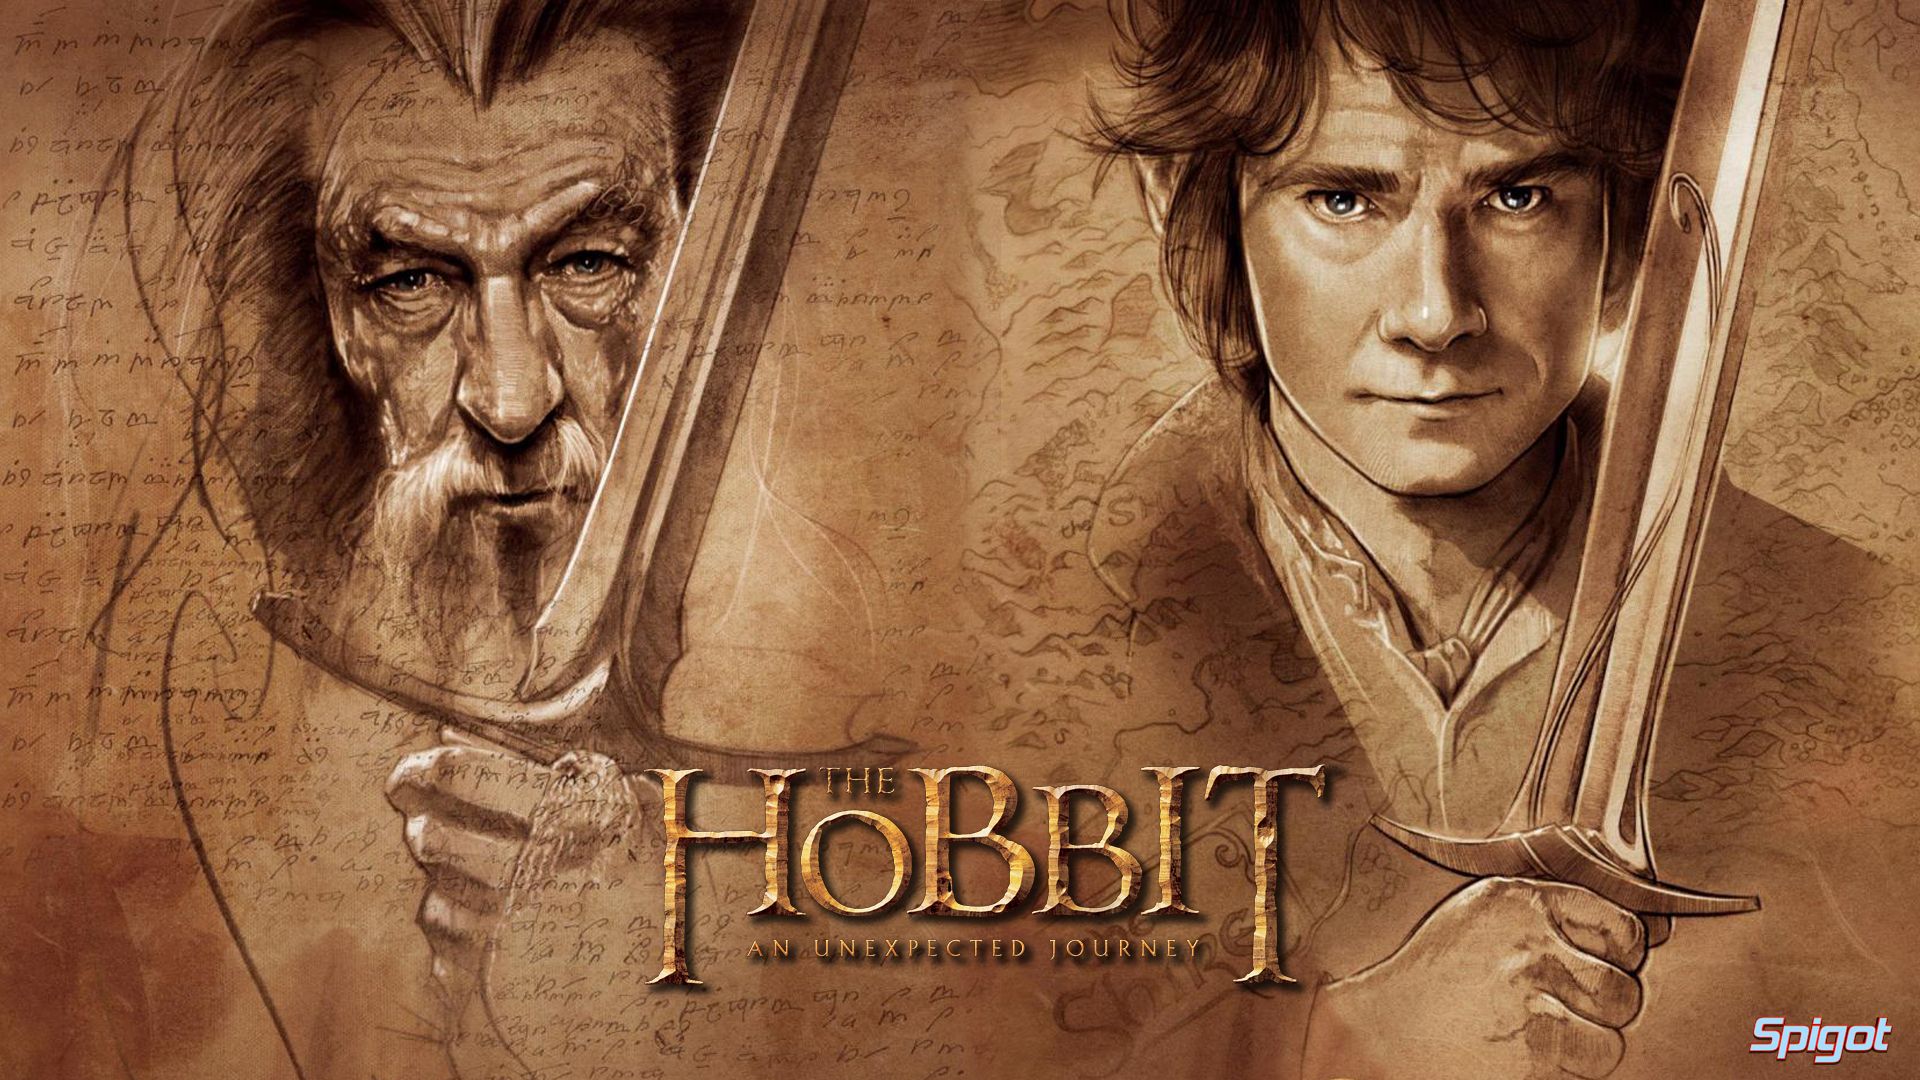 Bilbo Baggins | George Spigot's Blog